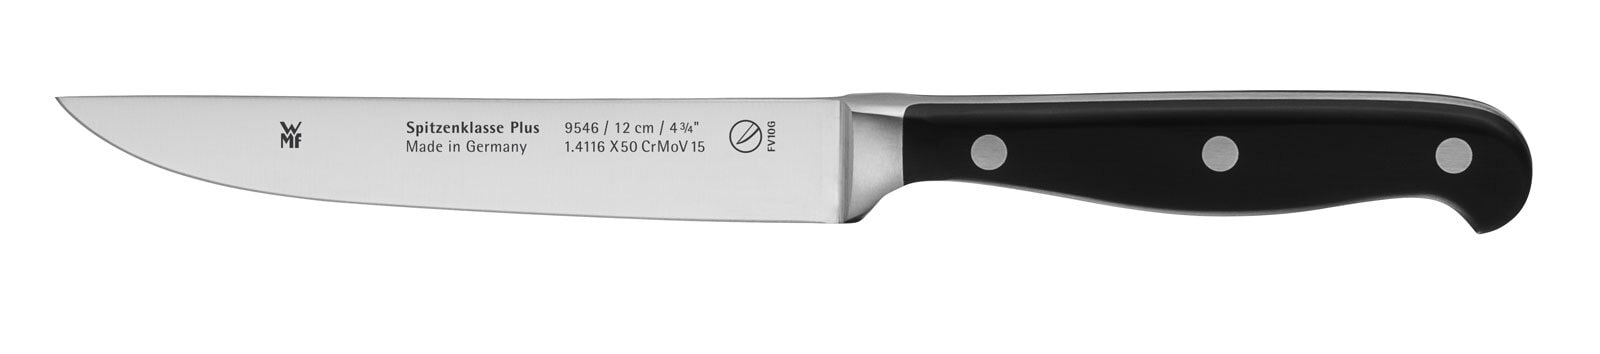 WMF Steakmesser SPITZENKLASSE 22 cm Edelstahl